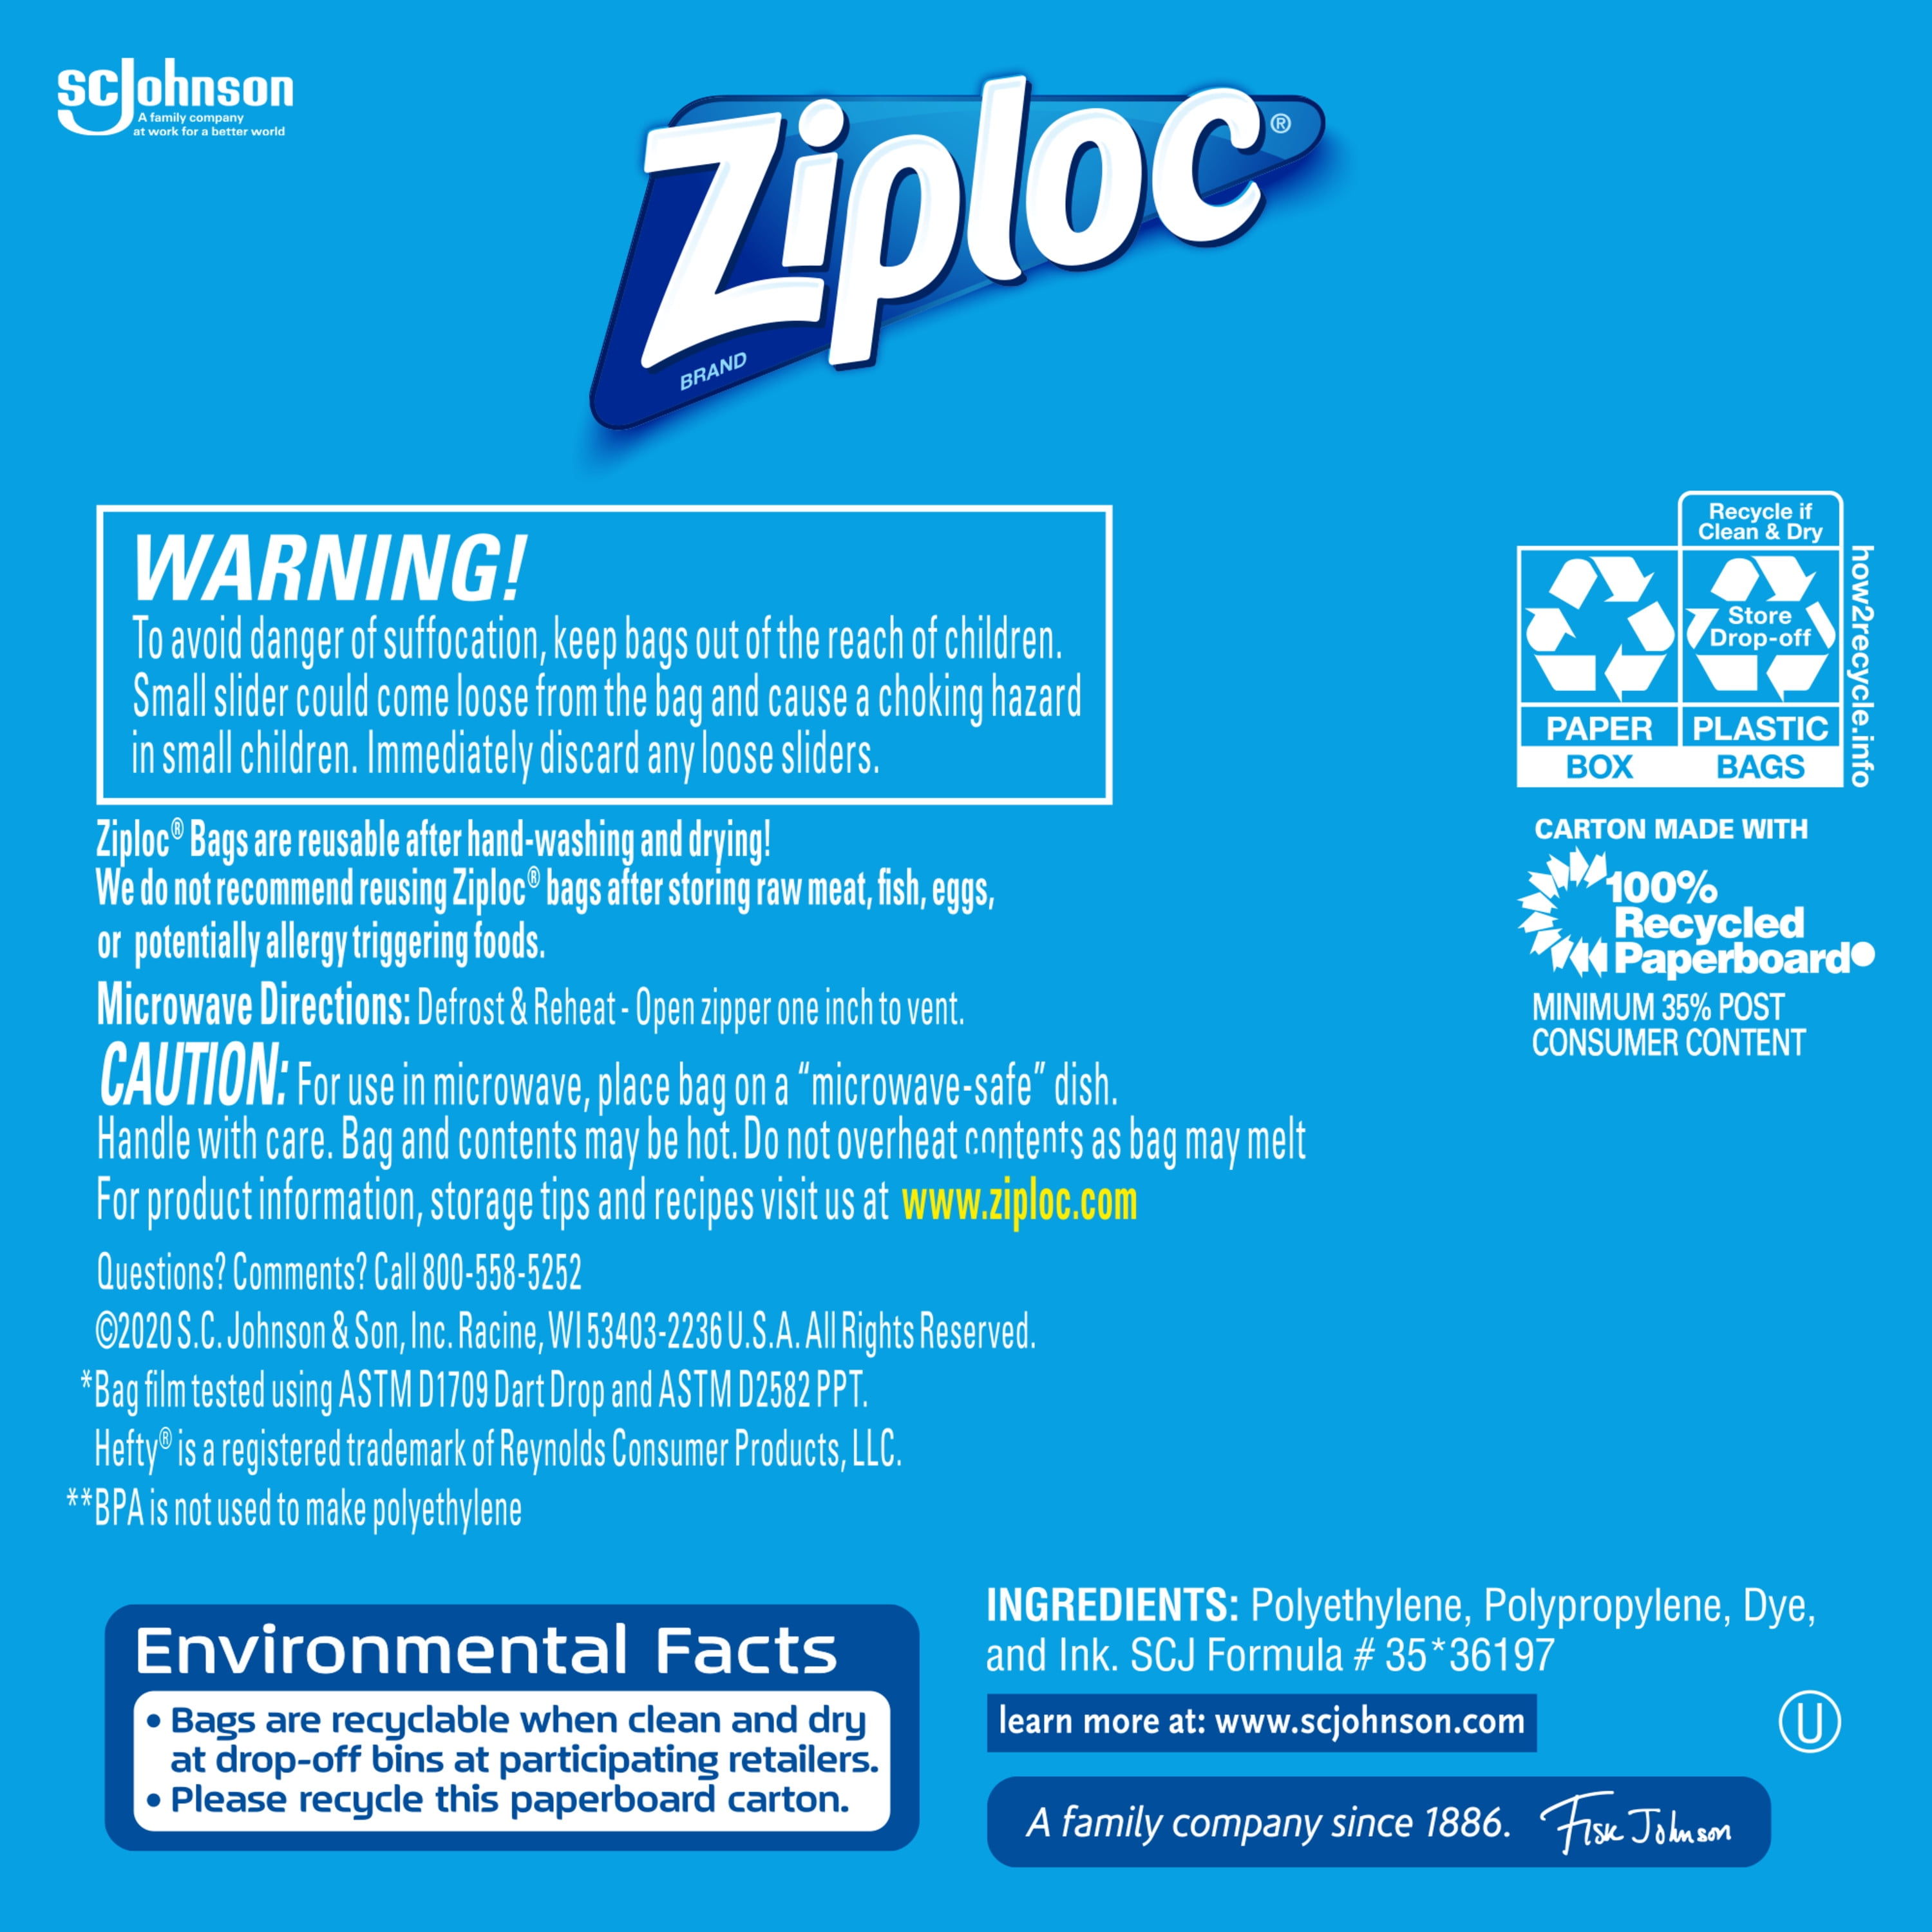 Ziploc® Brand Slider Freezer Bags with Power Shield Technology